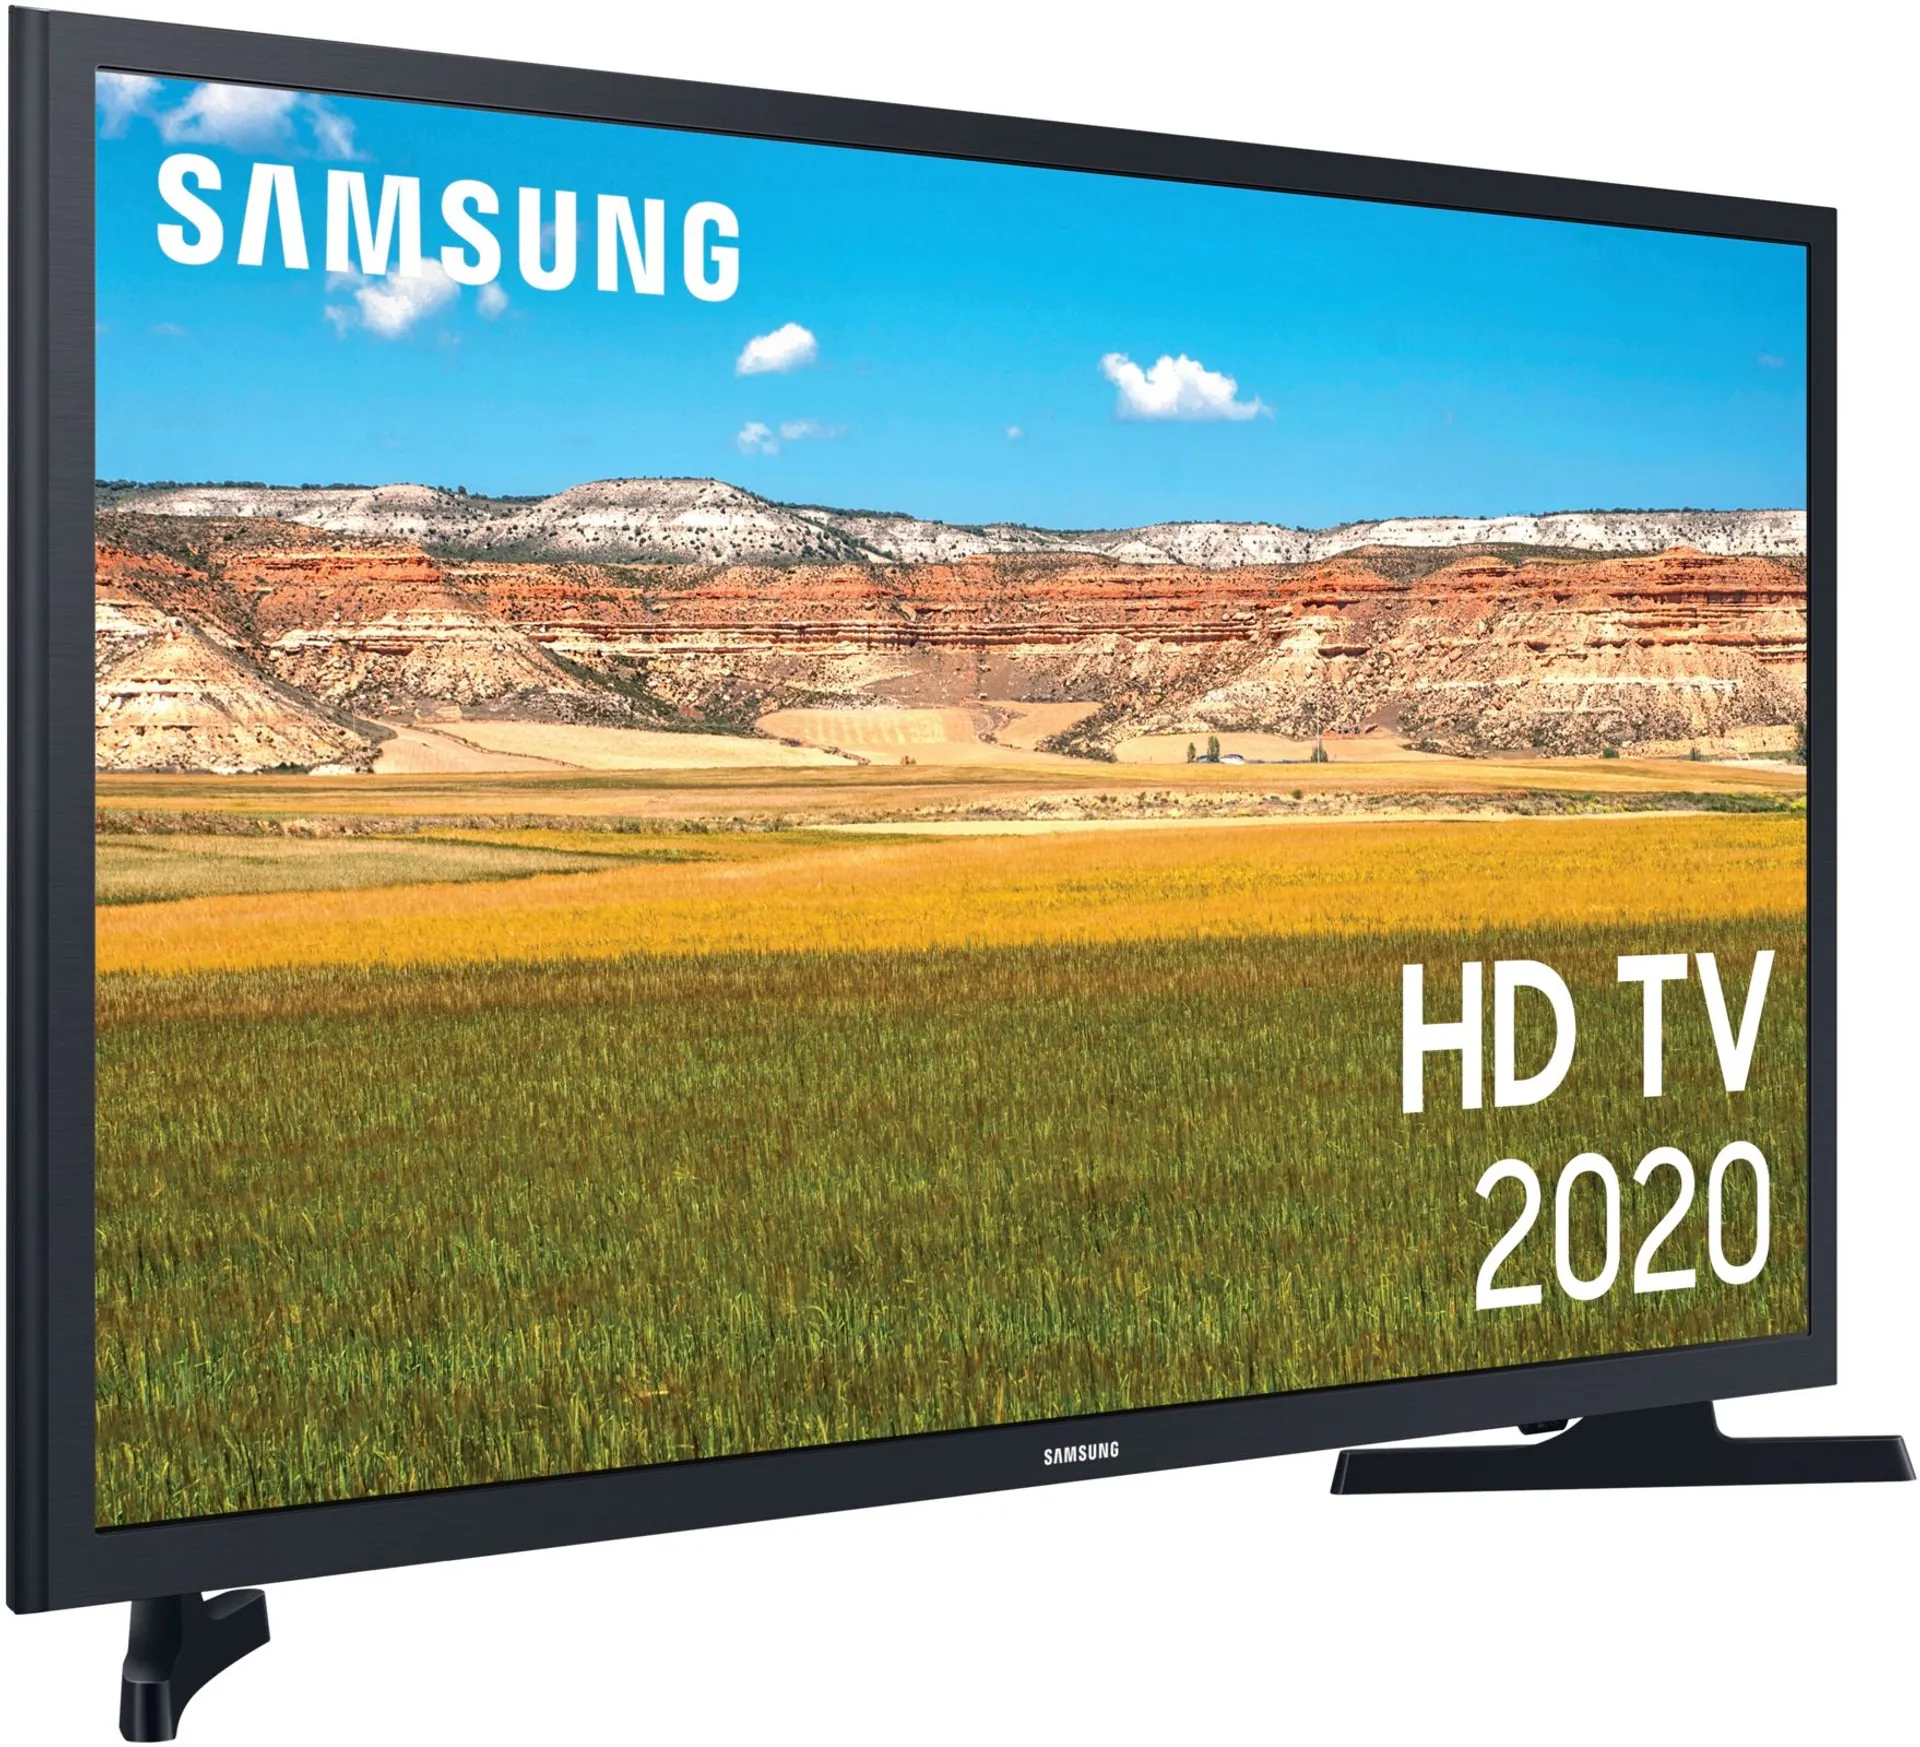 Samsung UE32T4305 32" HD Ready Smart TV - 3